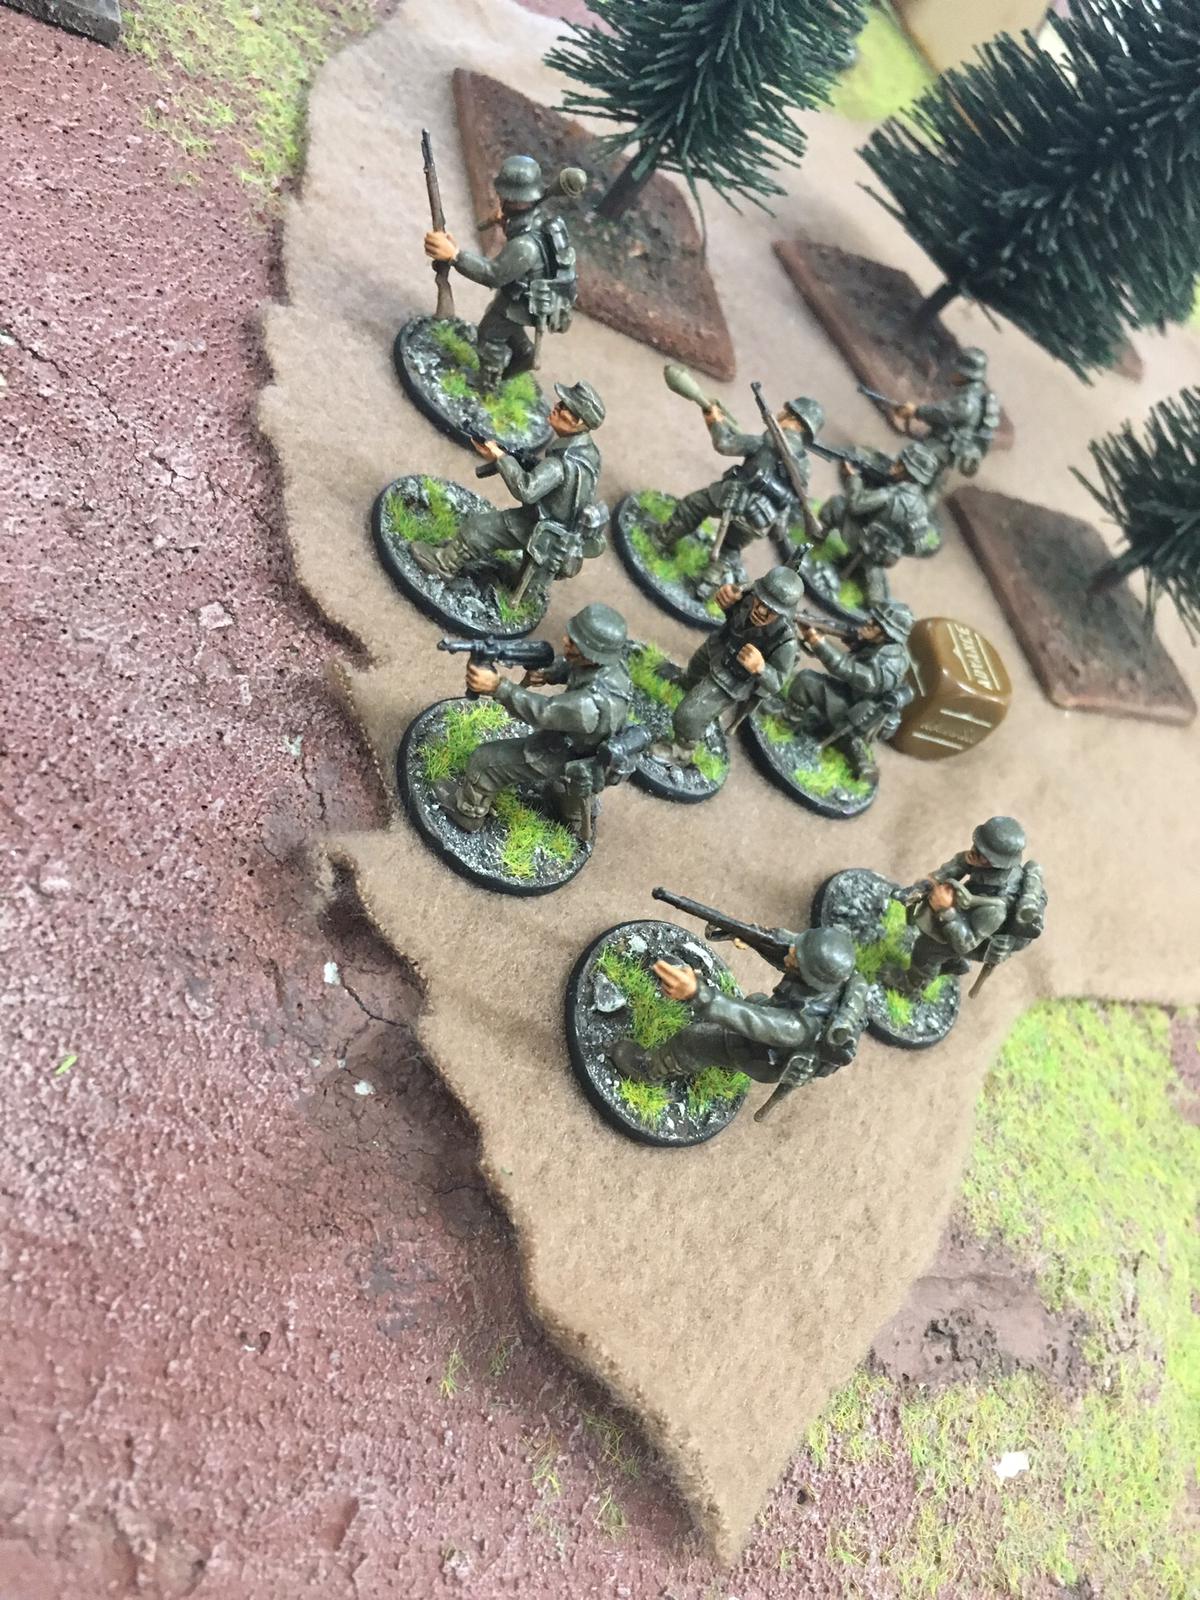 Desert Rats versus Platoon Storm in a fierce infantry engagement